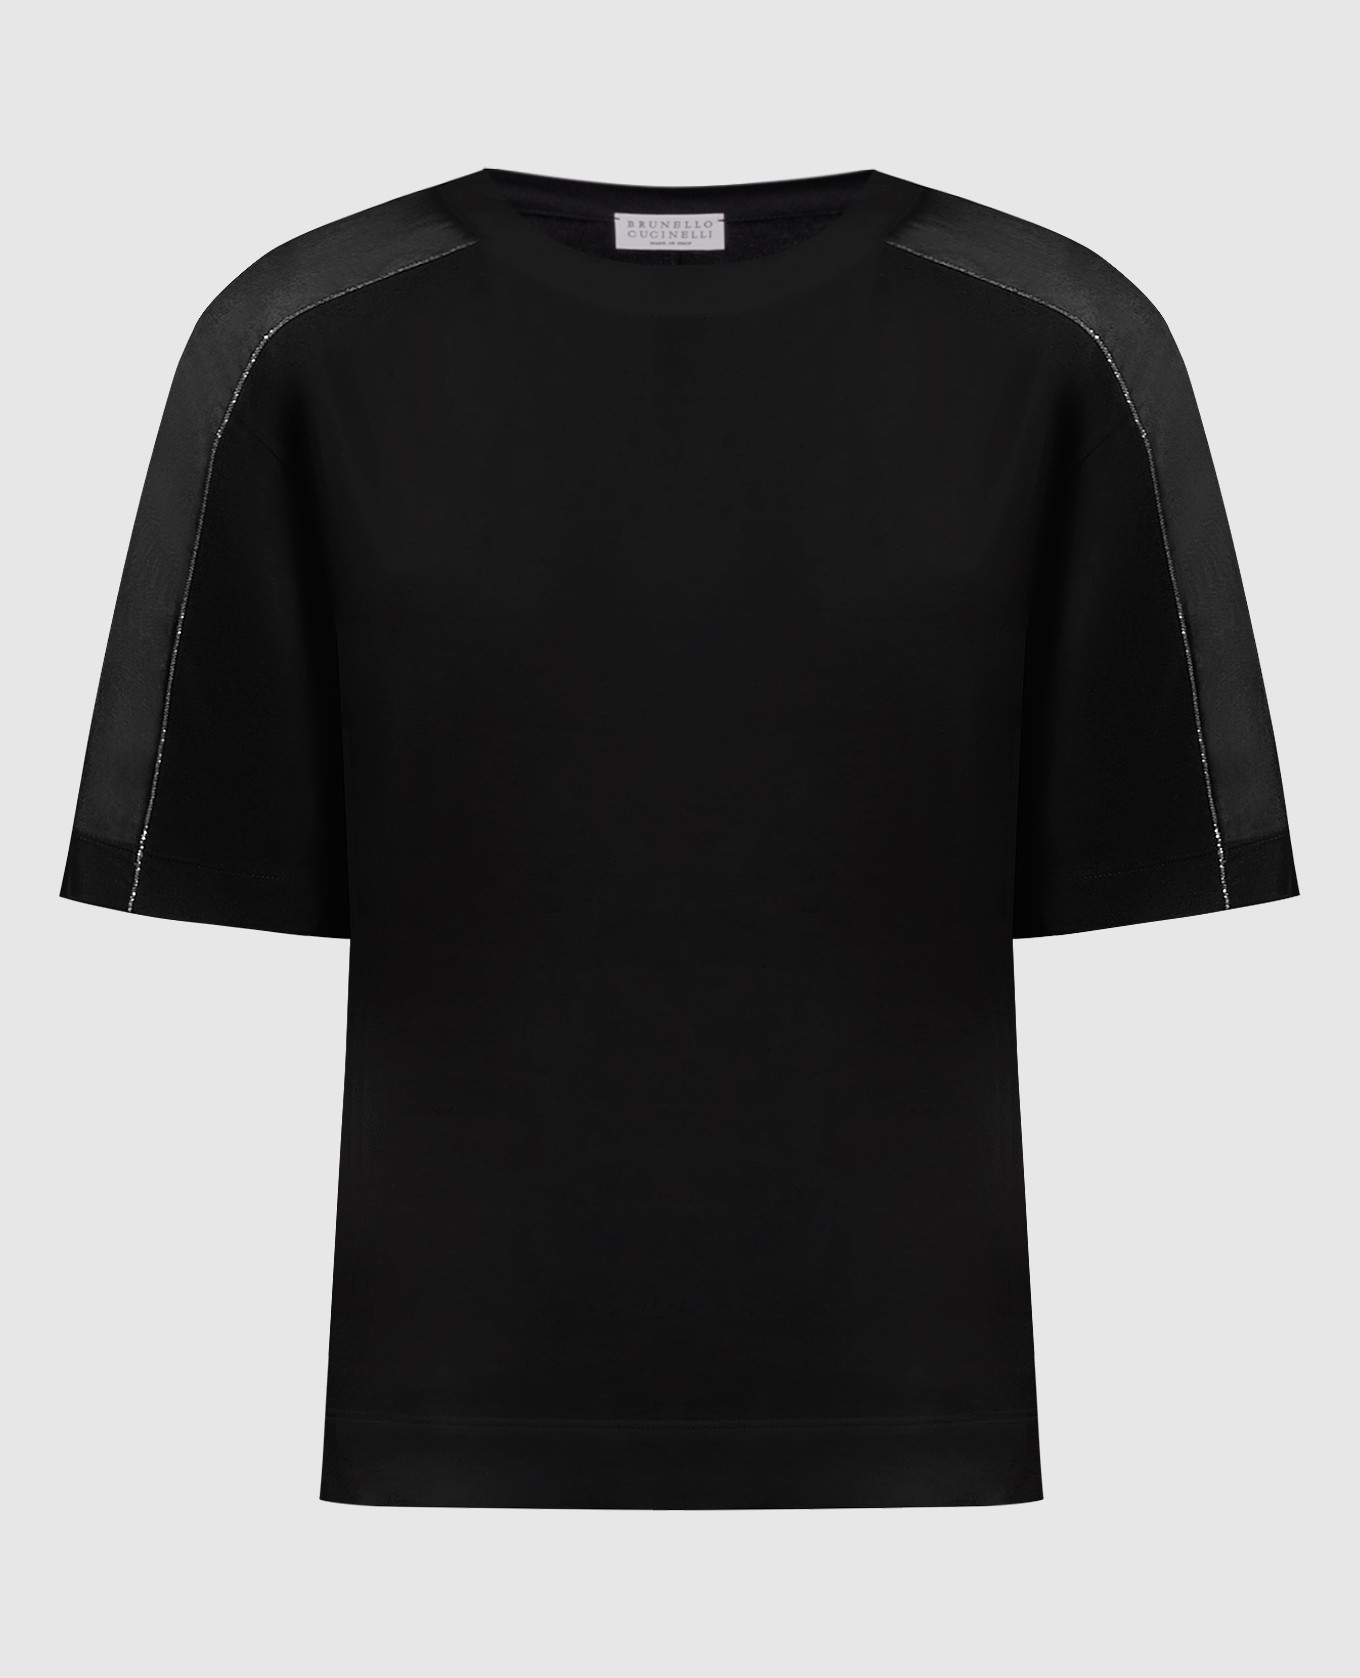 Black t-shirt with monil chain made of ecolathuni